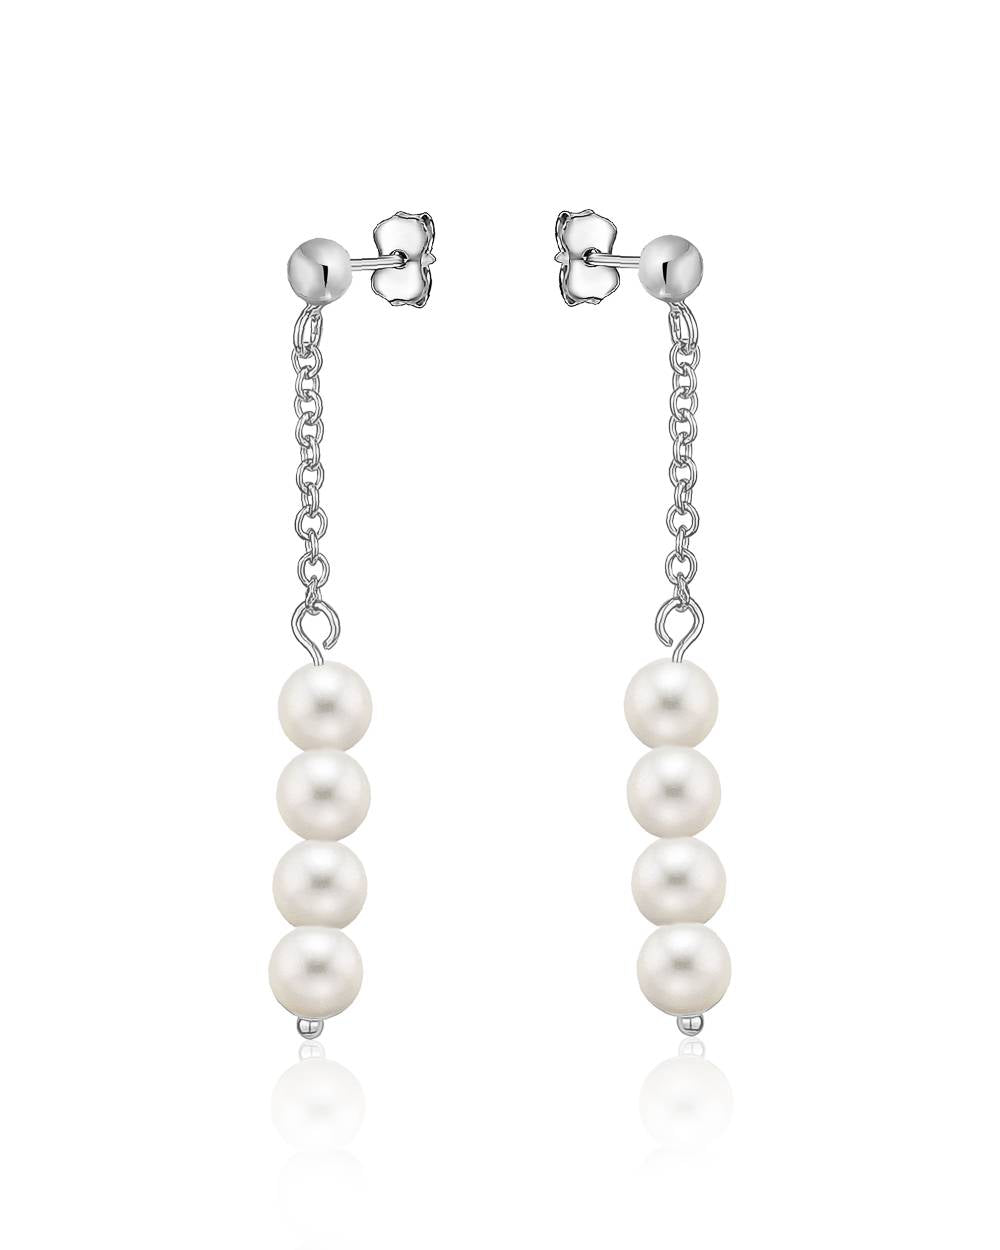 Dangling Freshwater Pearl Earrings